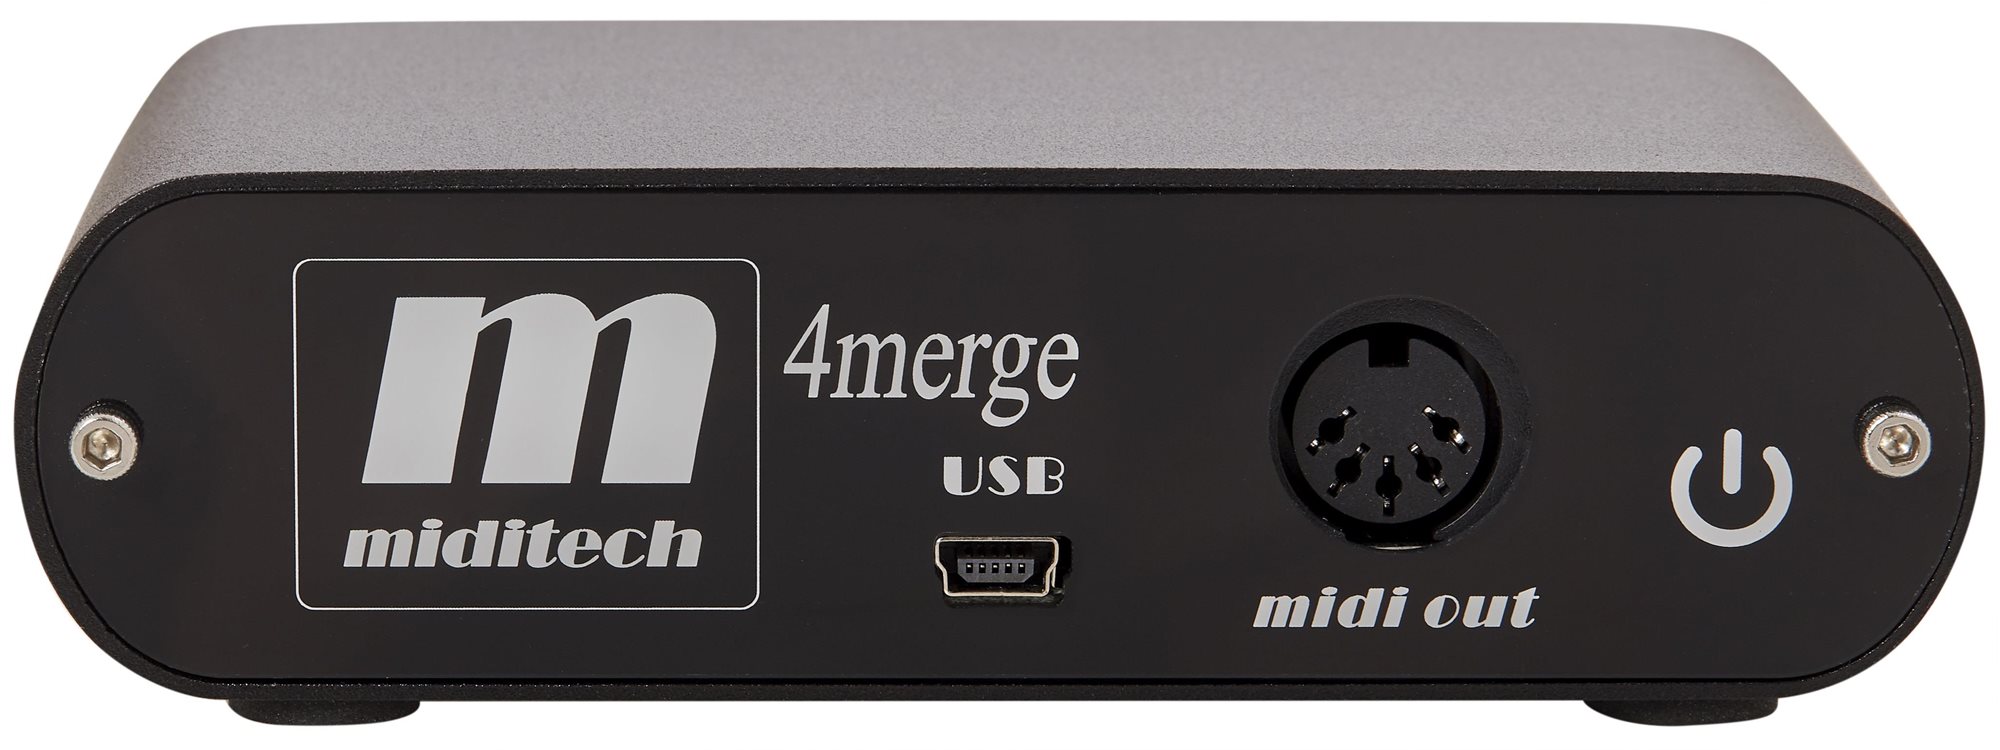 MIDITECH 4merge USB